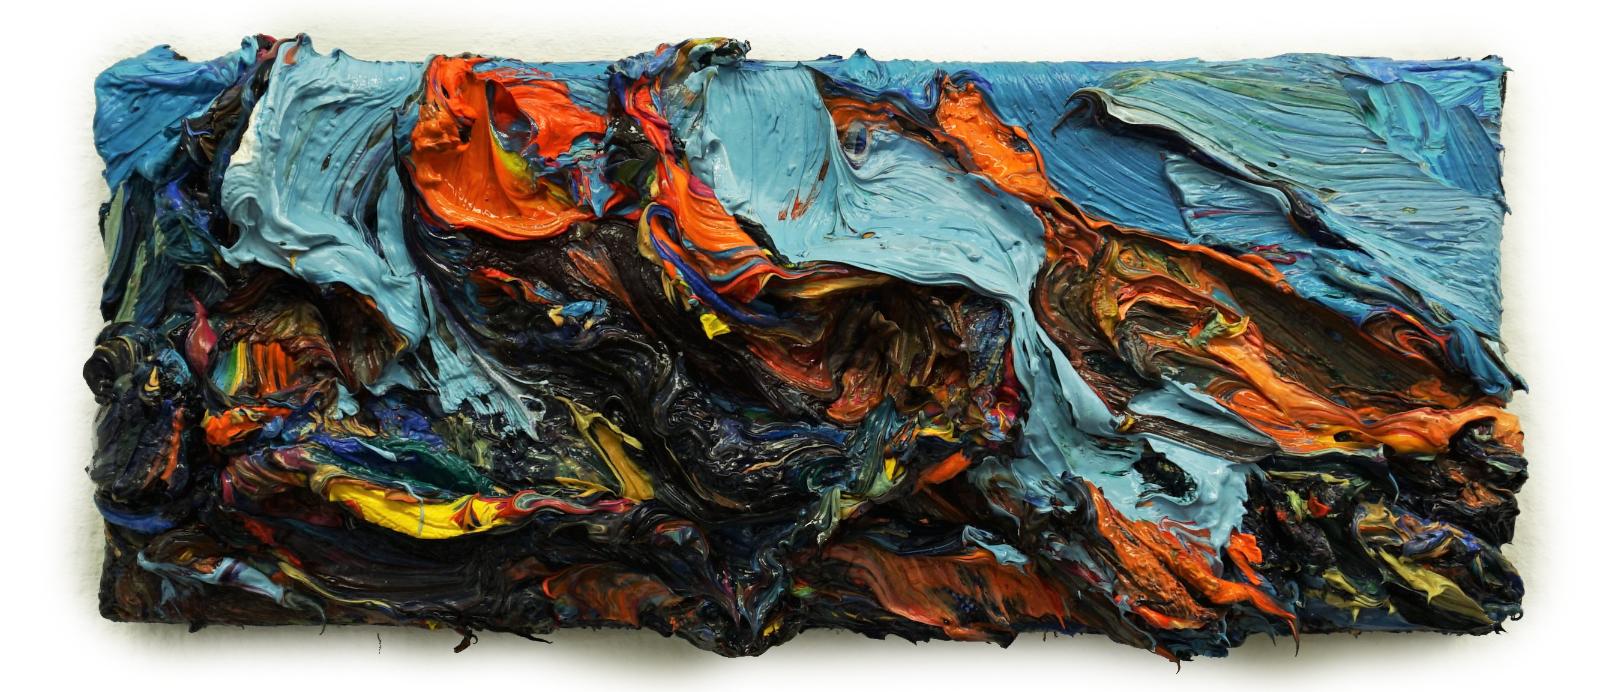 Harry Meyer, Land, 2019, Öl auf Leinwand, 10 x 25 cm, meh014ko